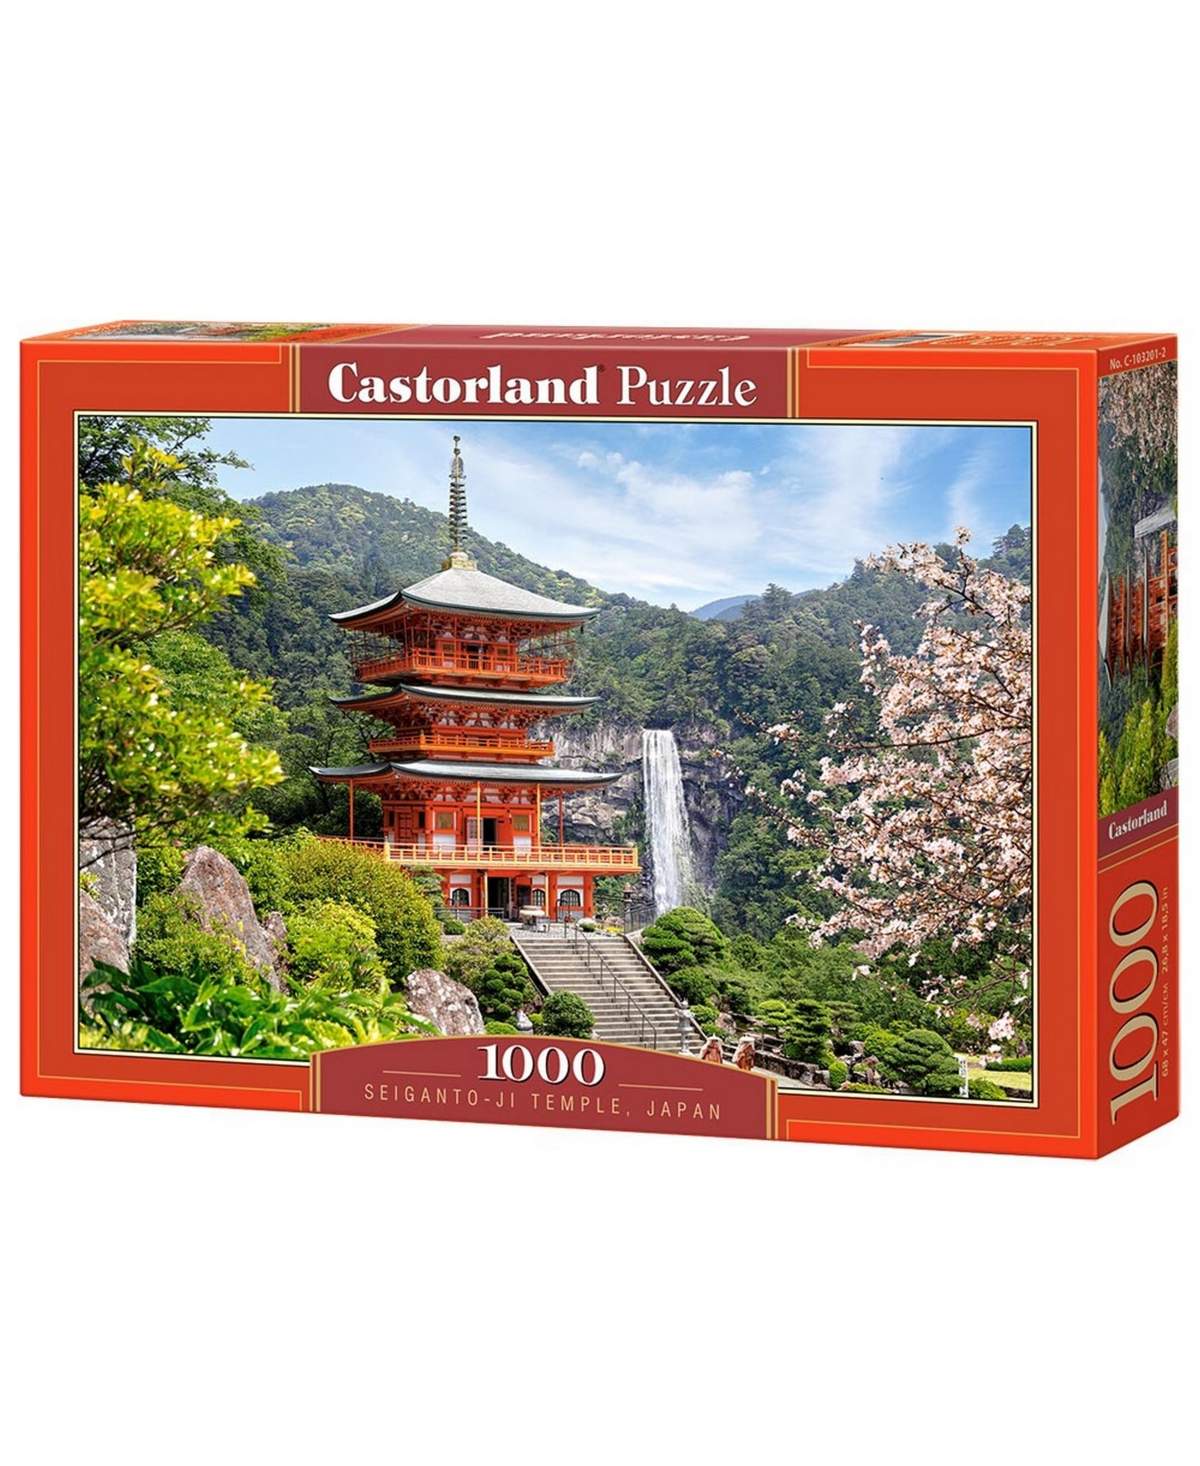 Castorland Seiganto-ji Temple, Japan Jigsaw Puzzle Set, 1000 Piece In Multicolor